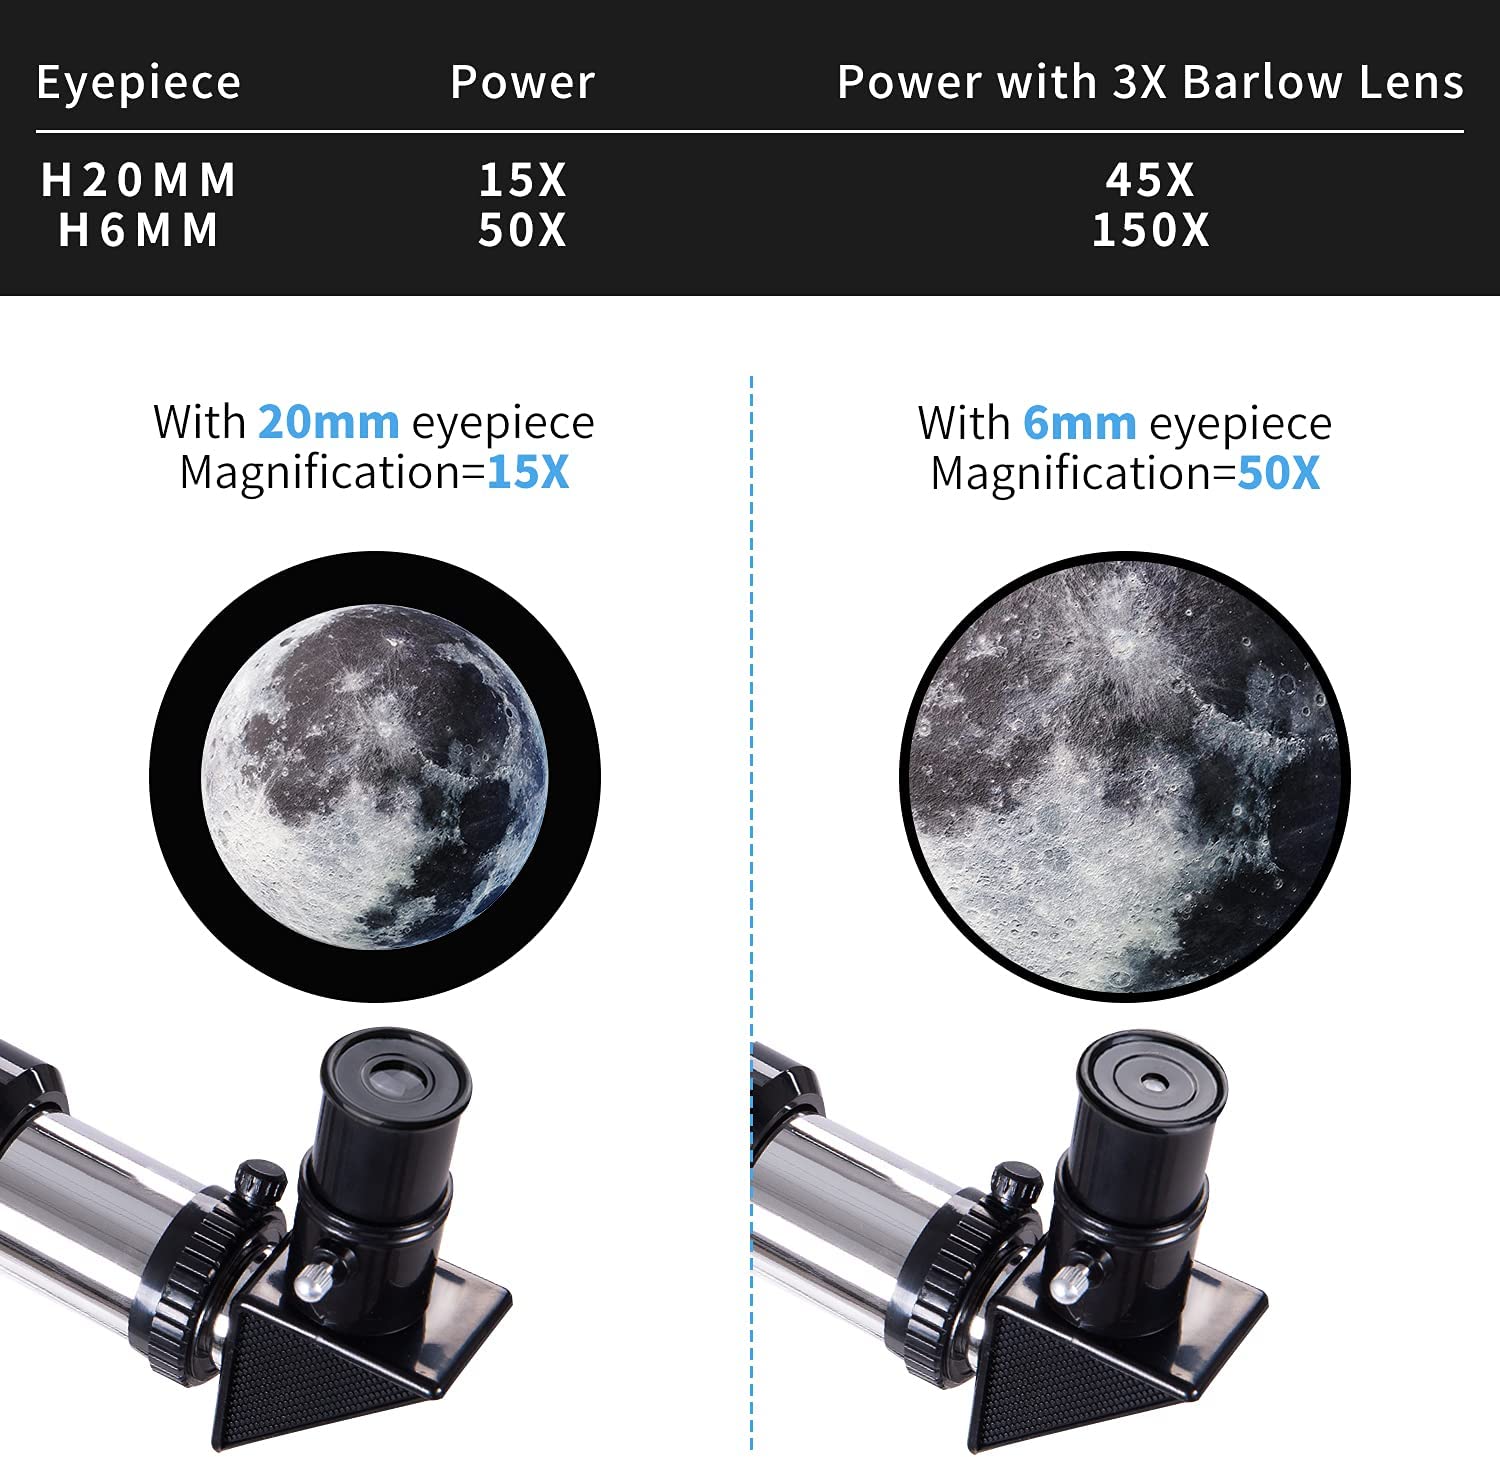 FreeSoldier 70mm Aperture Telescope, High Magnification, Superior Optics, Bonus Accessories, Day and Night Use